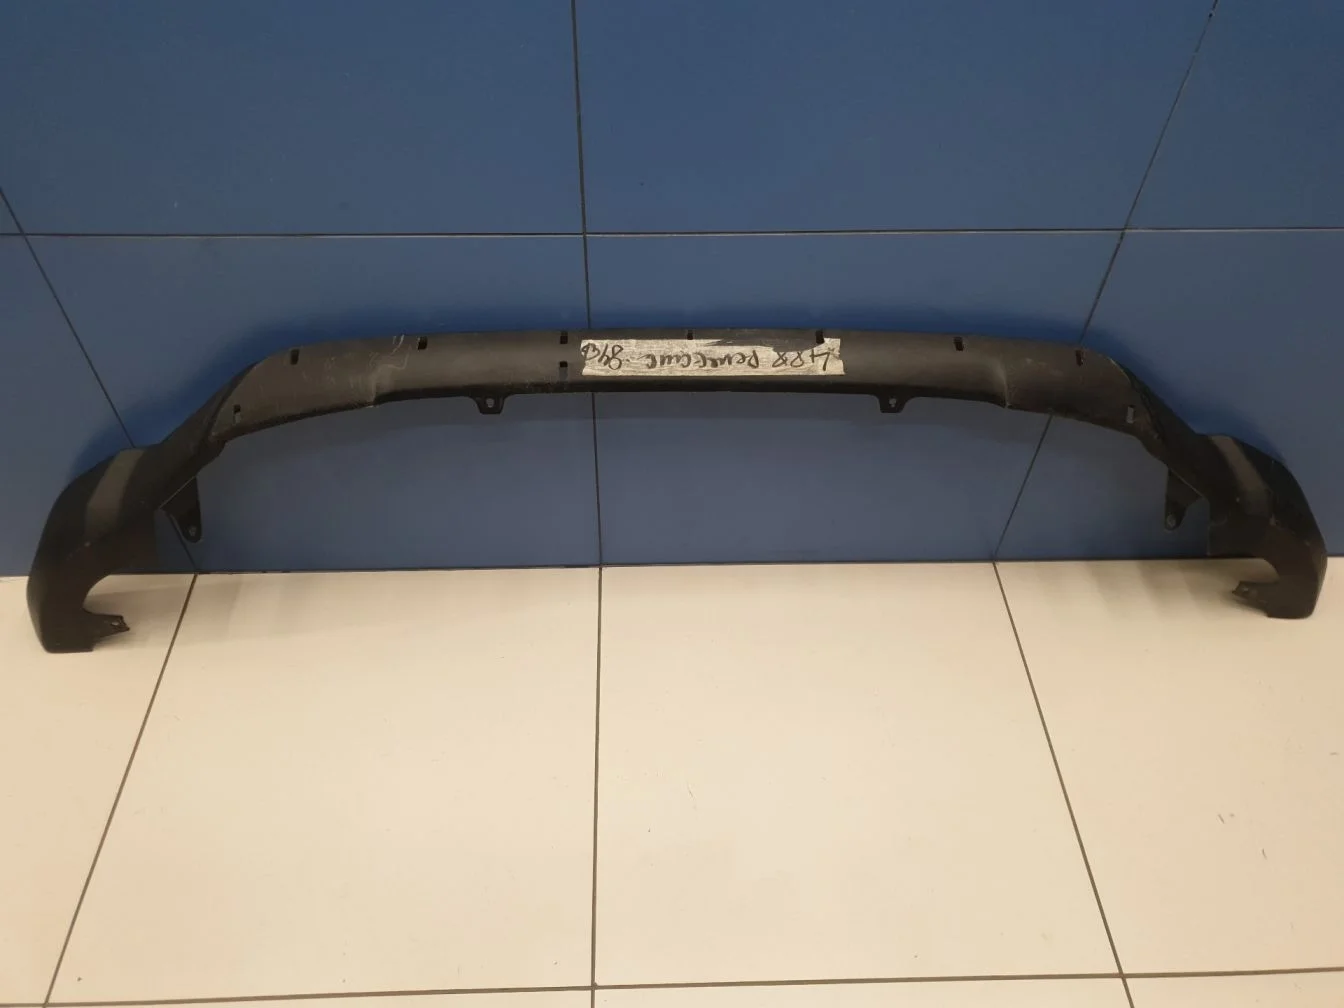 Юбка переднего бампера для Toyota RAV 4 2013-2019